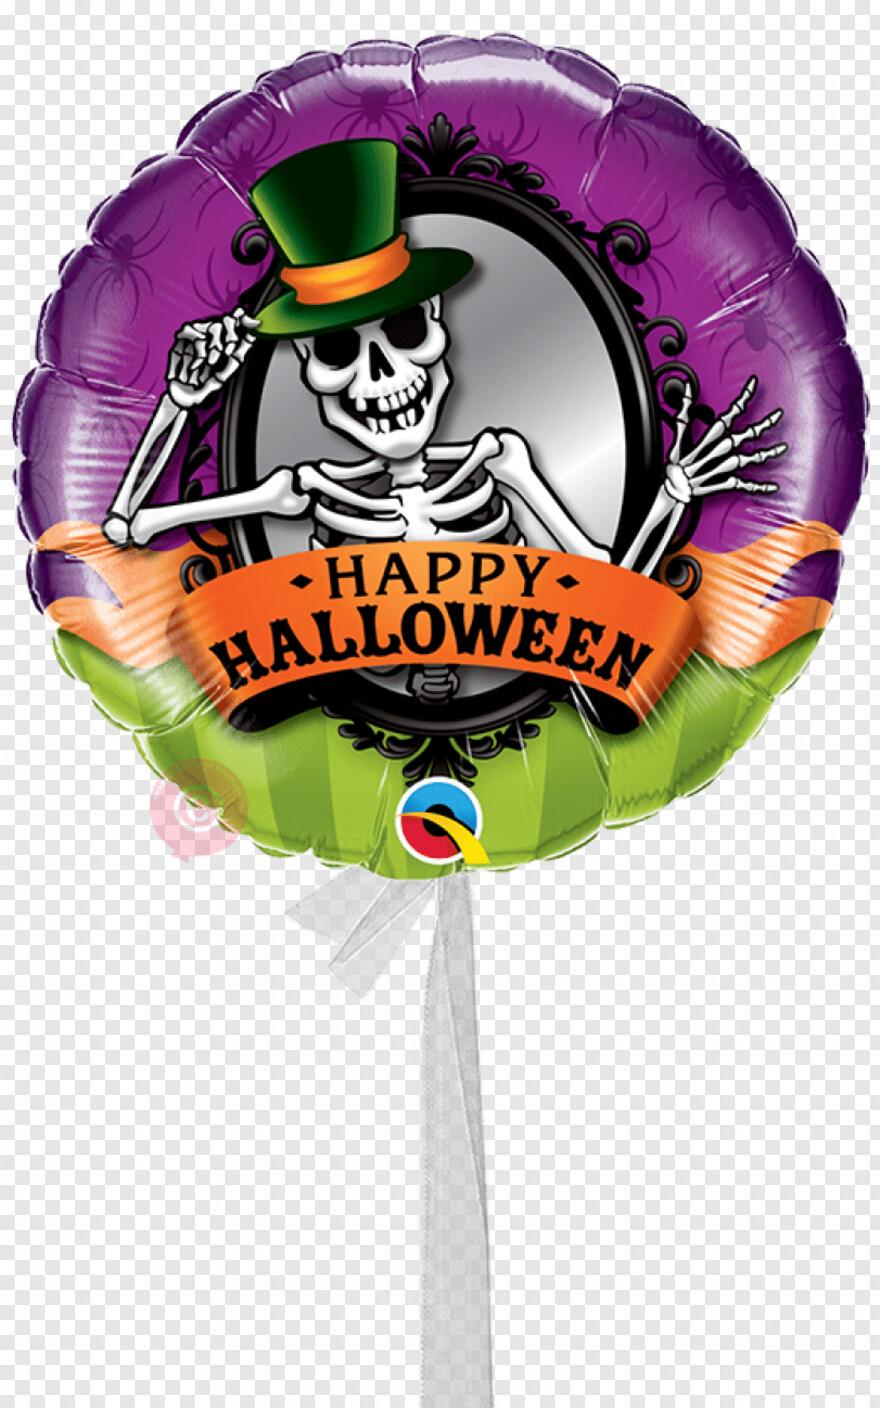  Halloween Party, Mirror, Halloween Border, Skeleton, Halloween Candy, Halloween Ghost